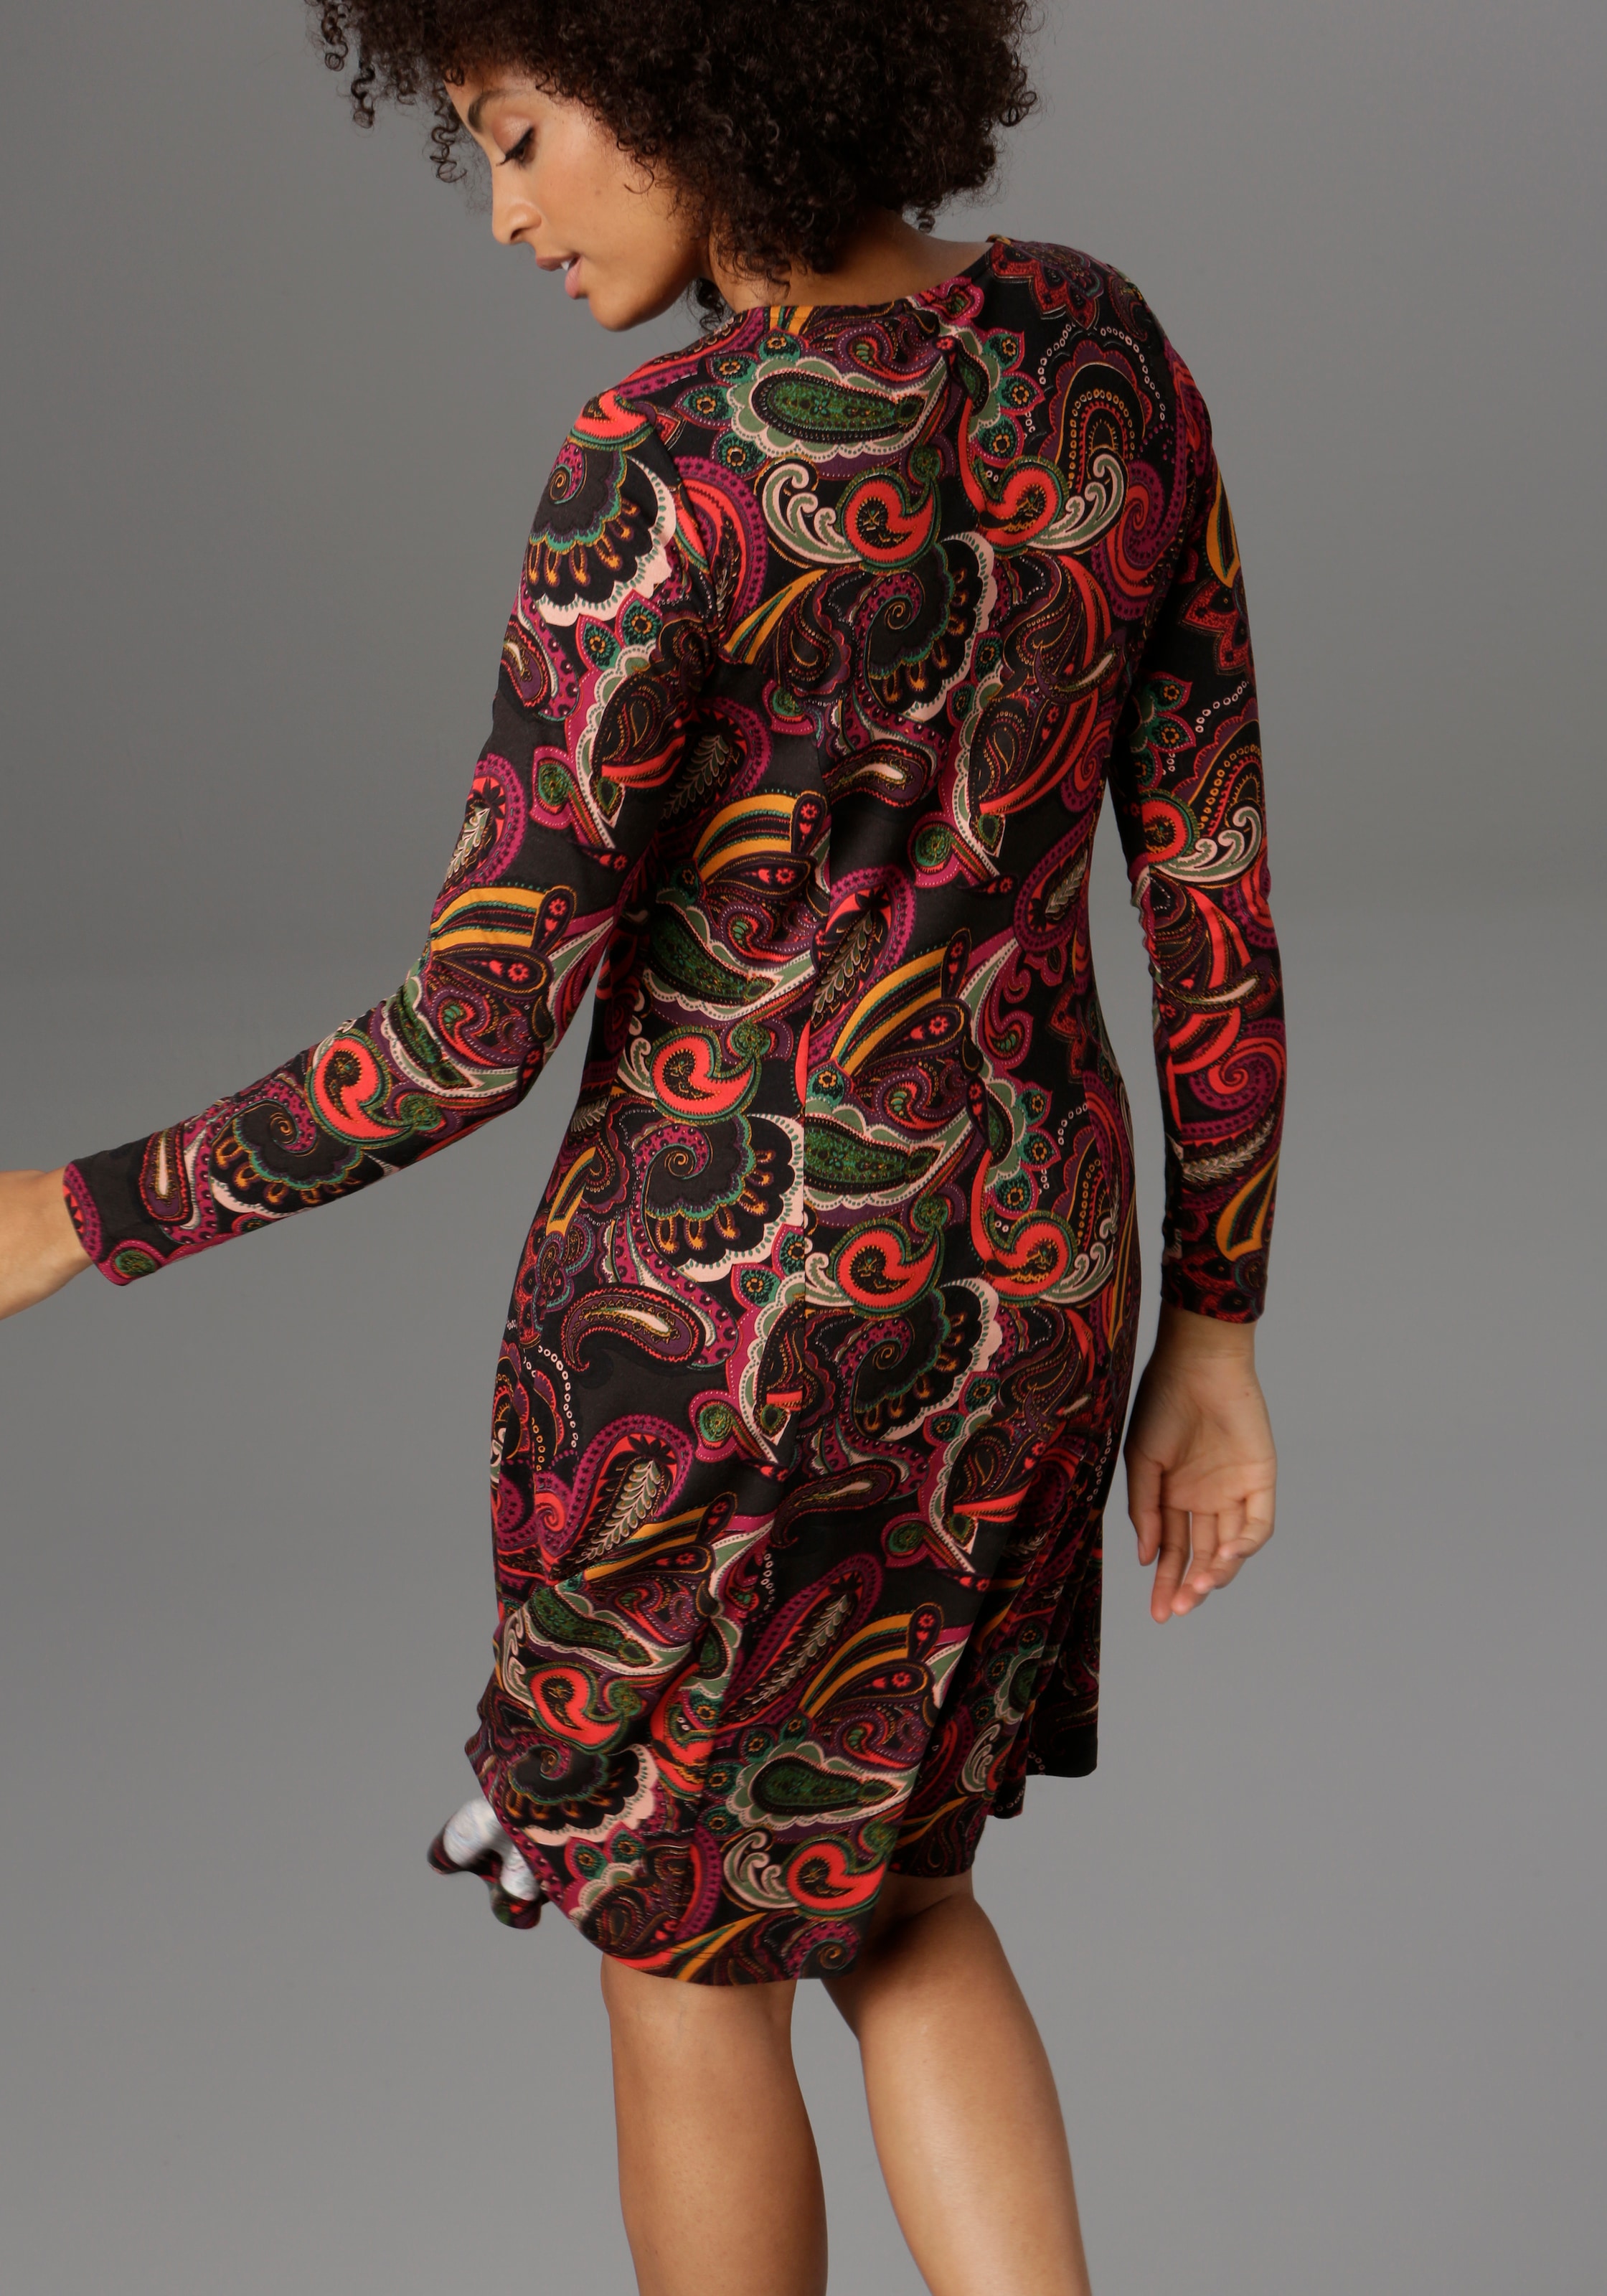 Aniston SELECTED Jerseykleid, Paisley-Druck in satten bei Farben